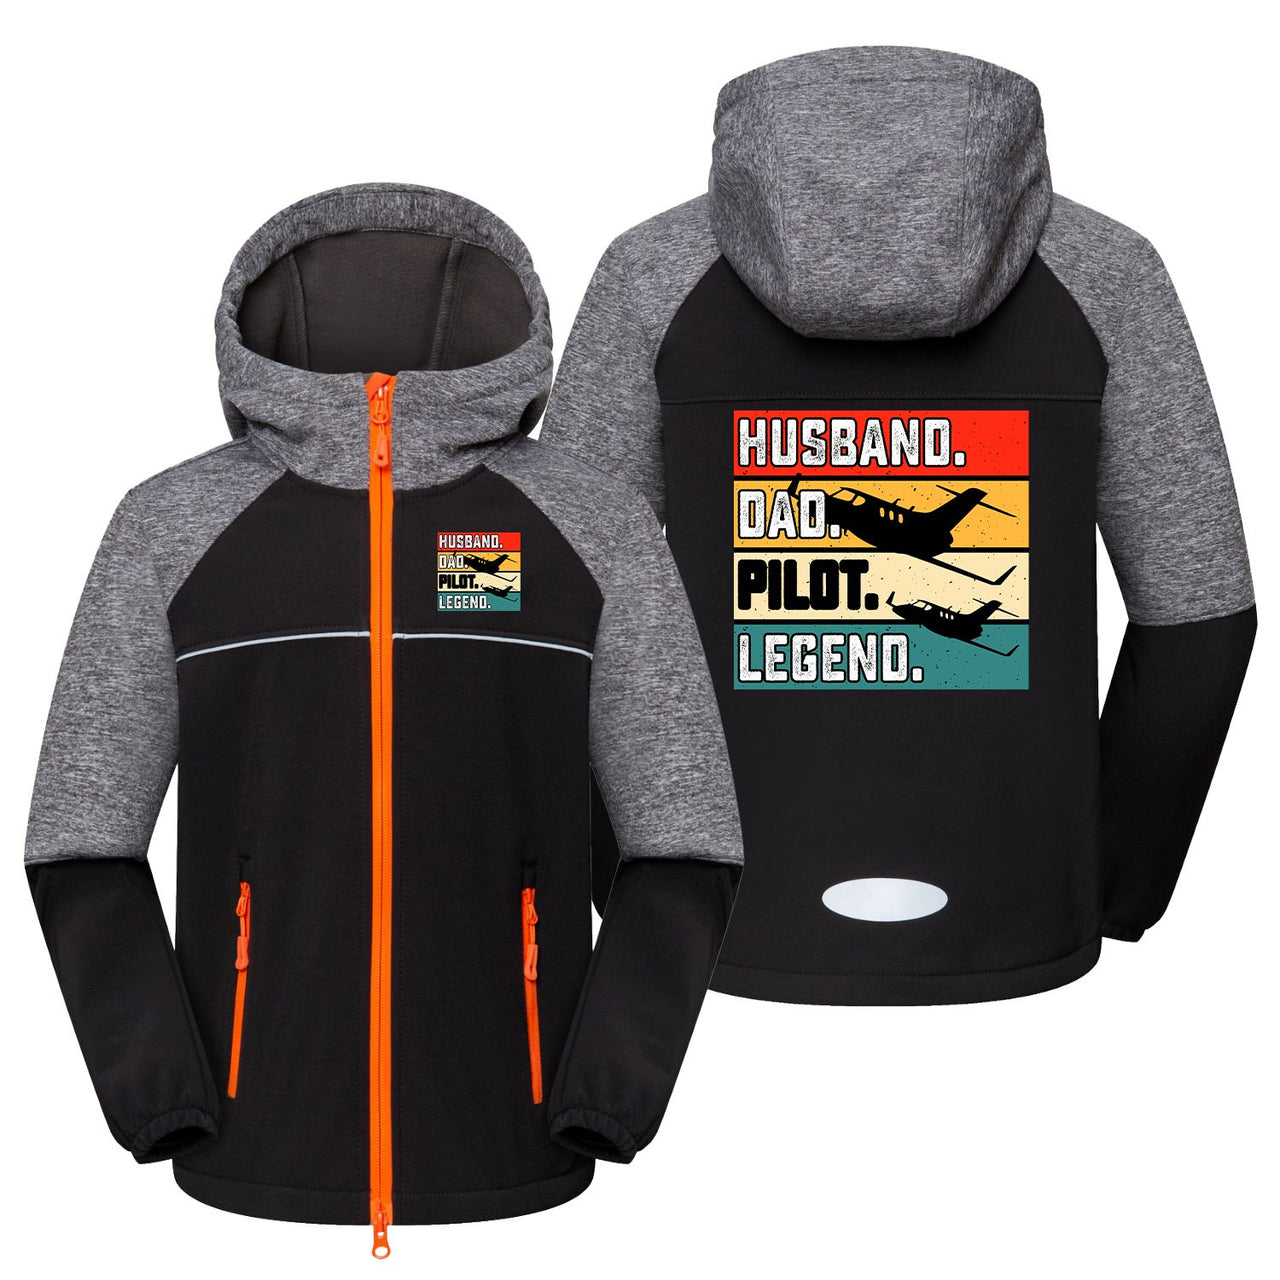 Husband & Dad & Pilot & Legend Designed Children Polar Style Jackets